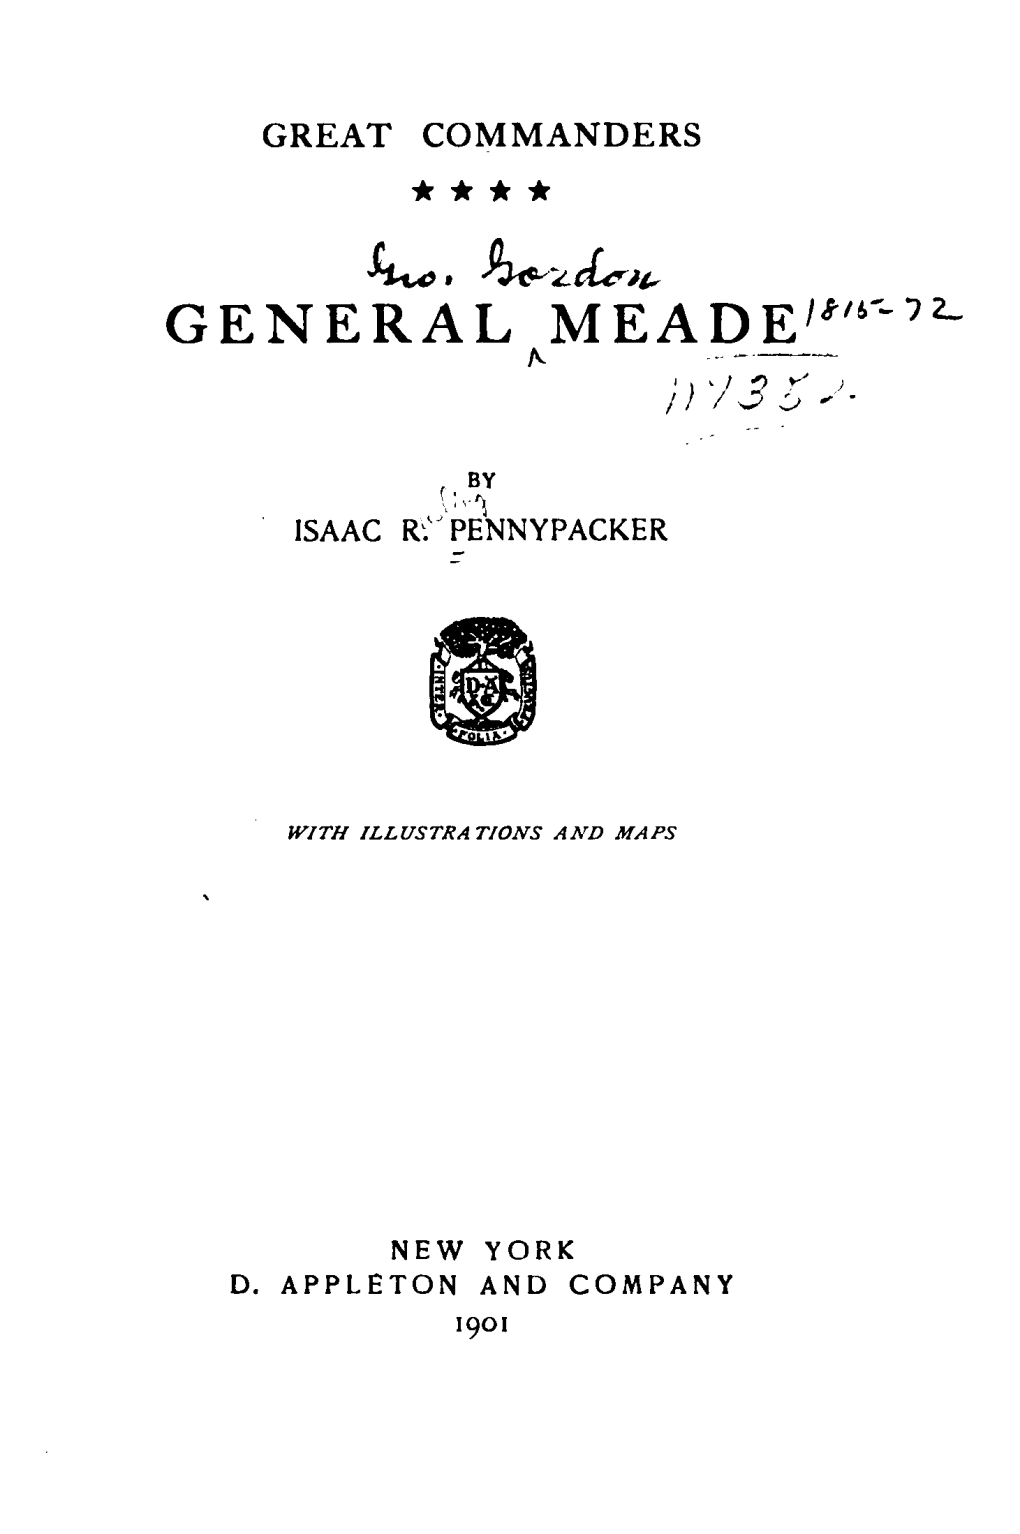 GENERAL MEADE COPYRIGHT, 1901, Bv D